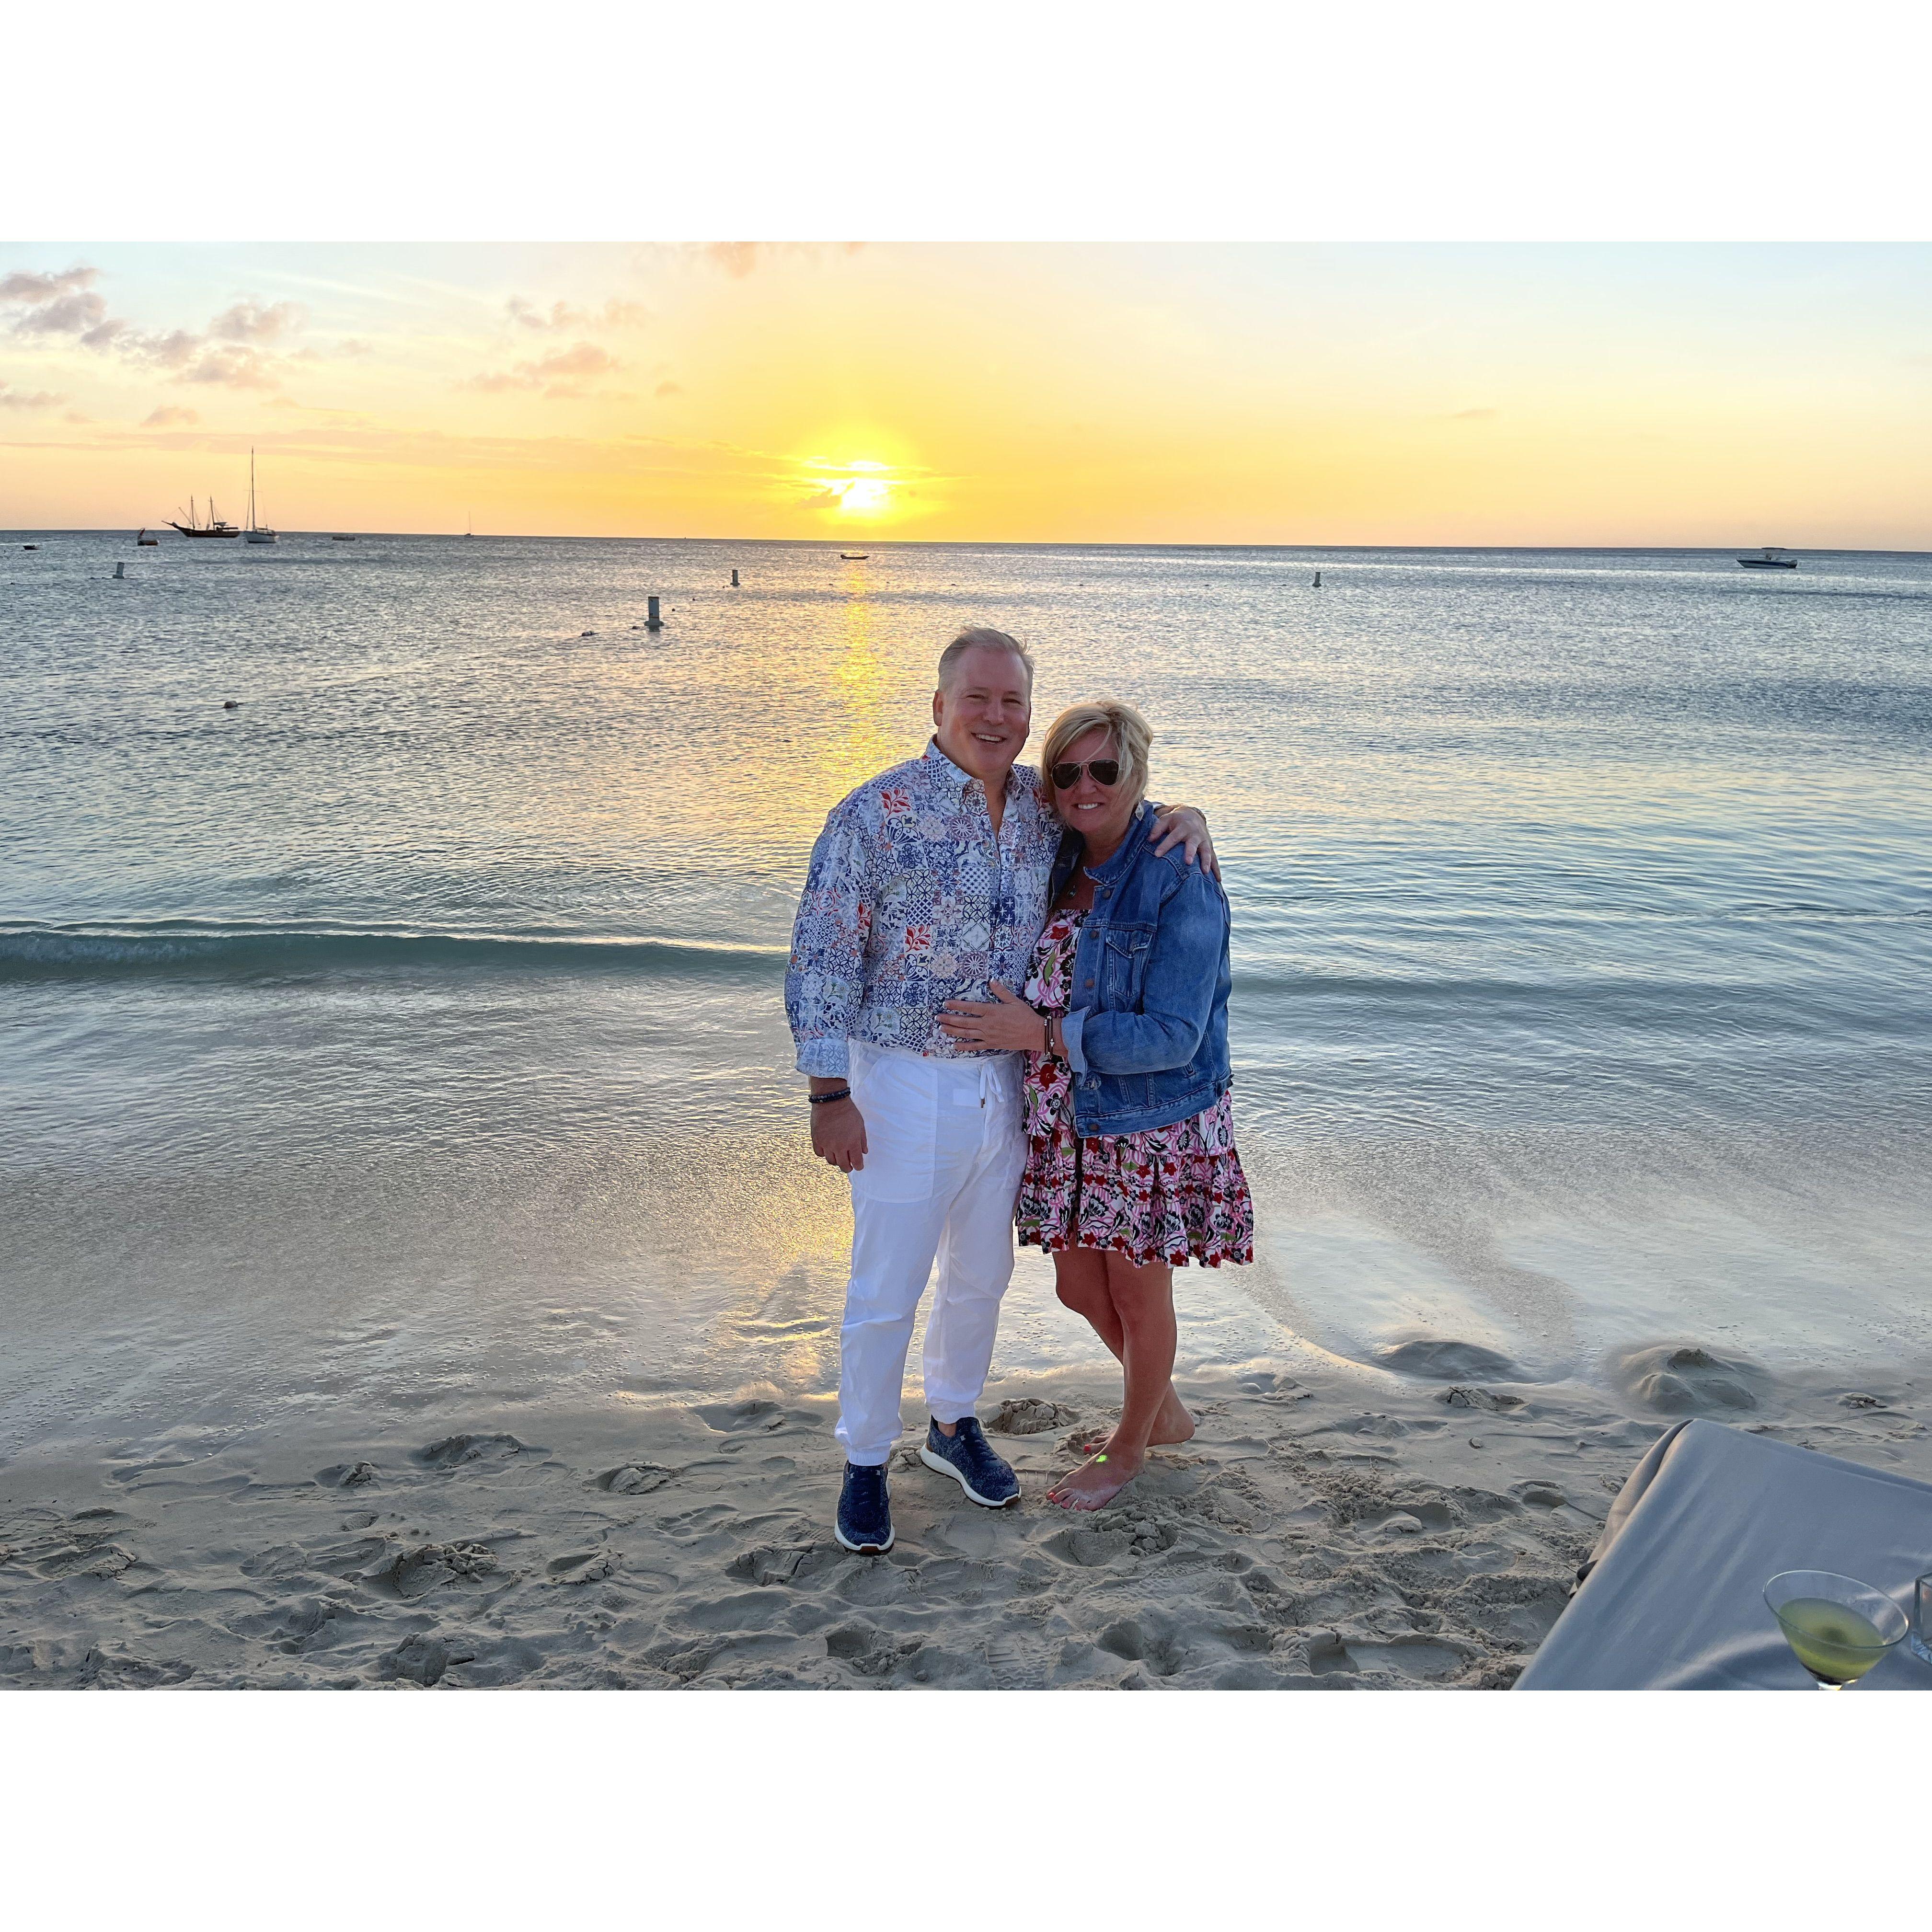 Aruba - where we got engaged!